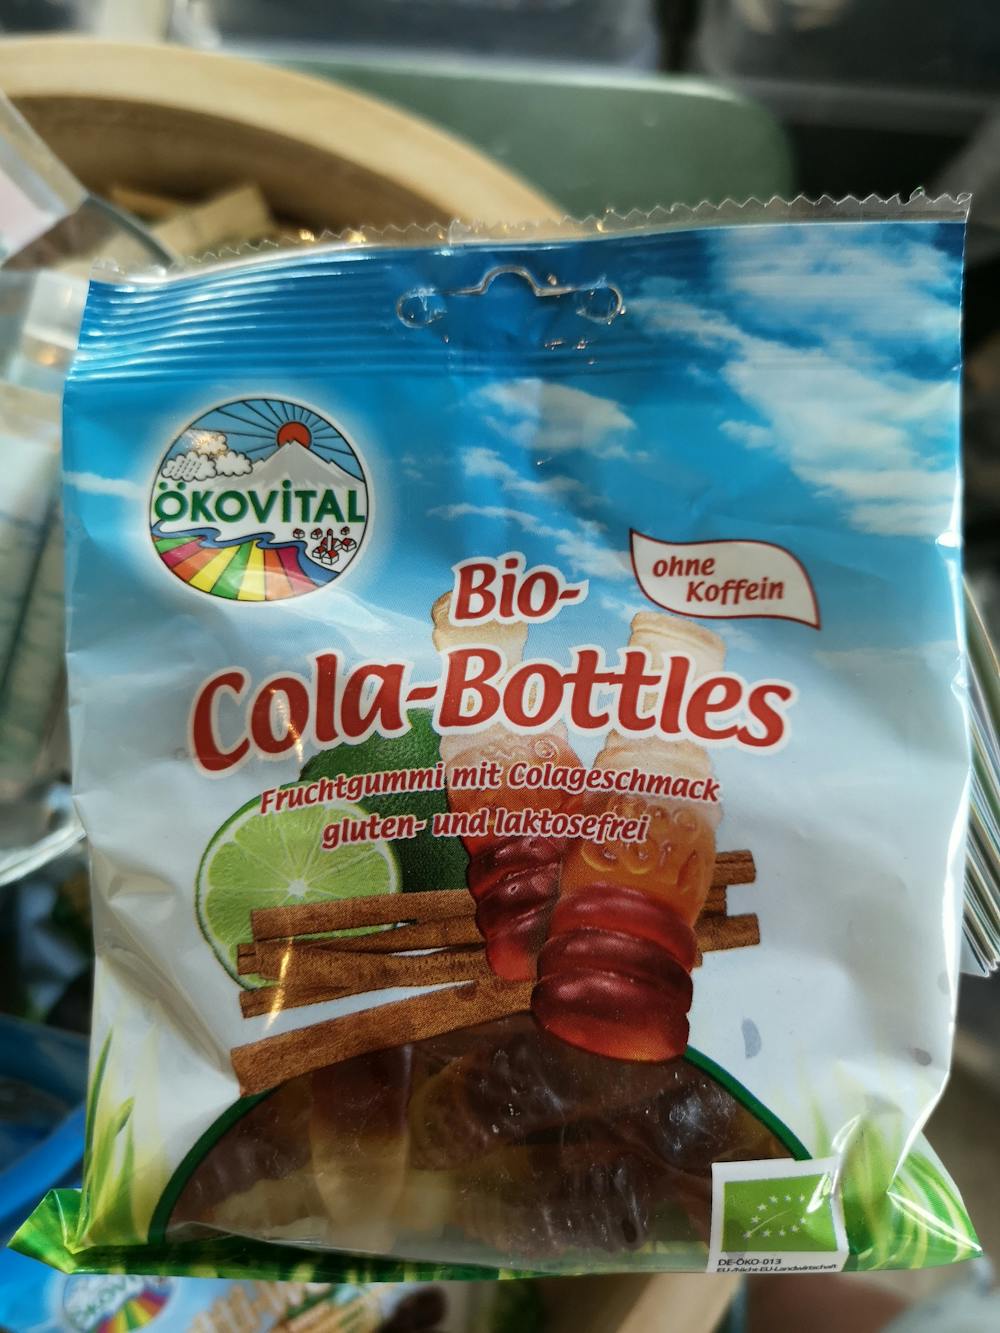 Bio-cola-bottles, Ökovital